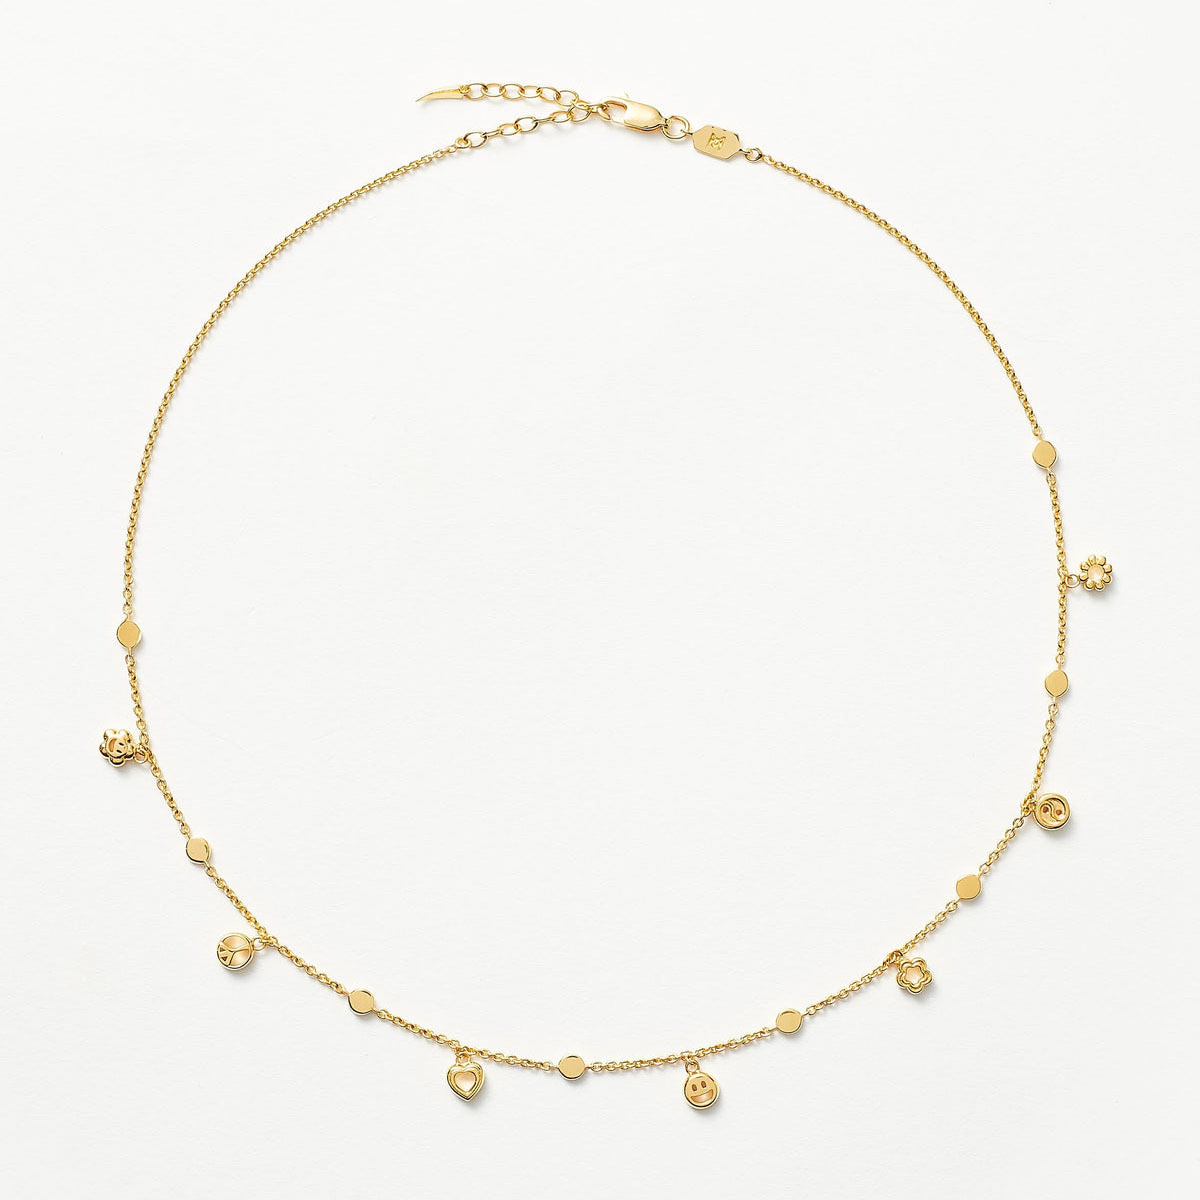 Produsen perhiasan grosir khusus membuat kalung choker multi pesona berlapis emas 18k vermeil